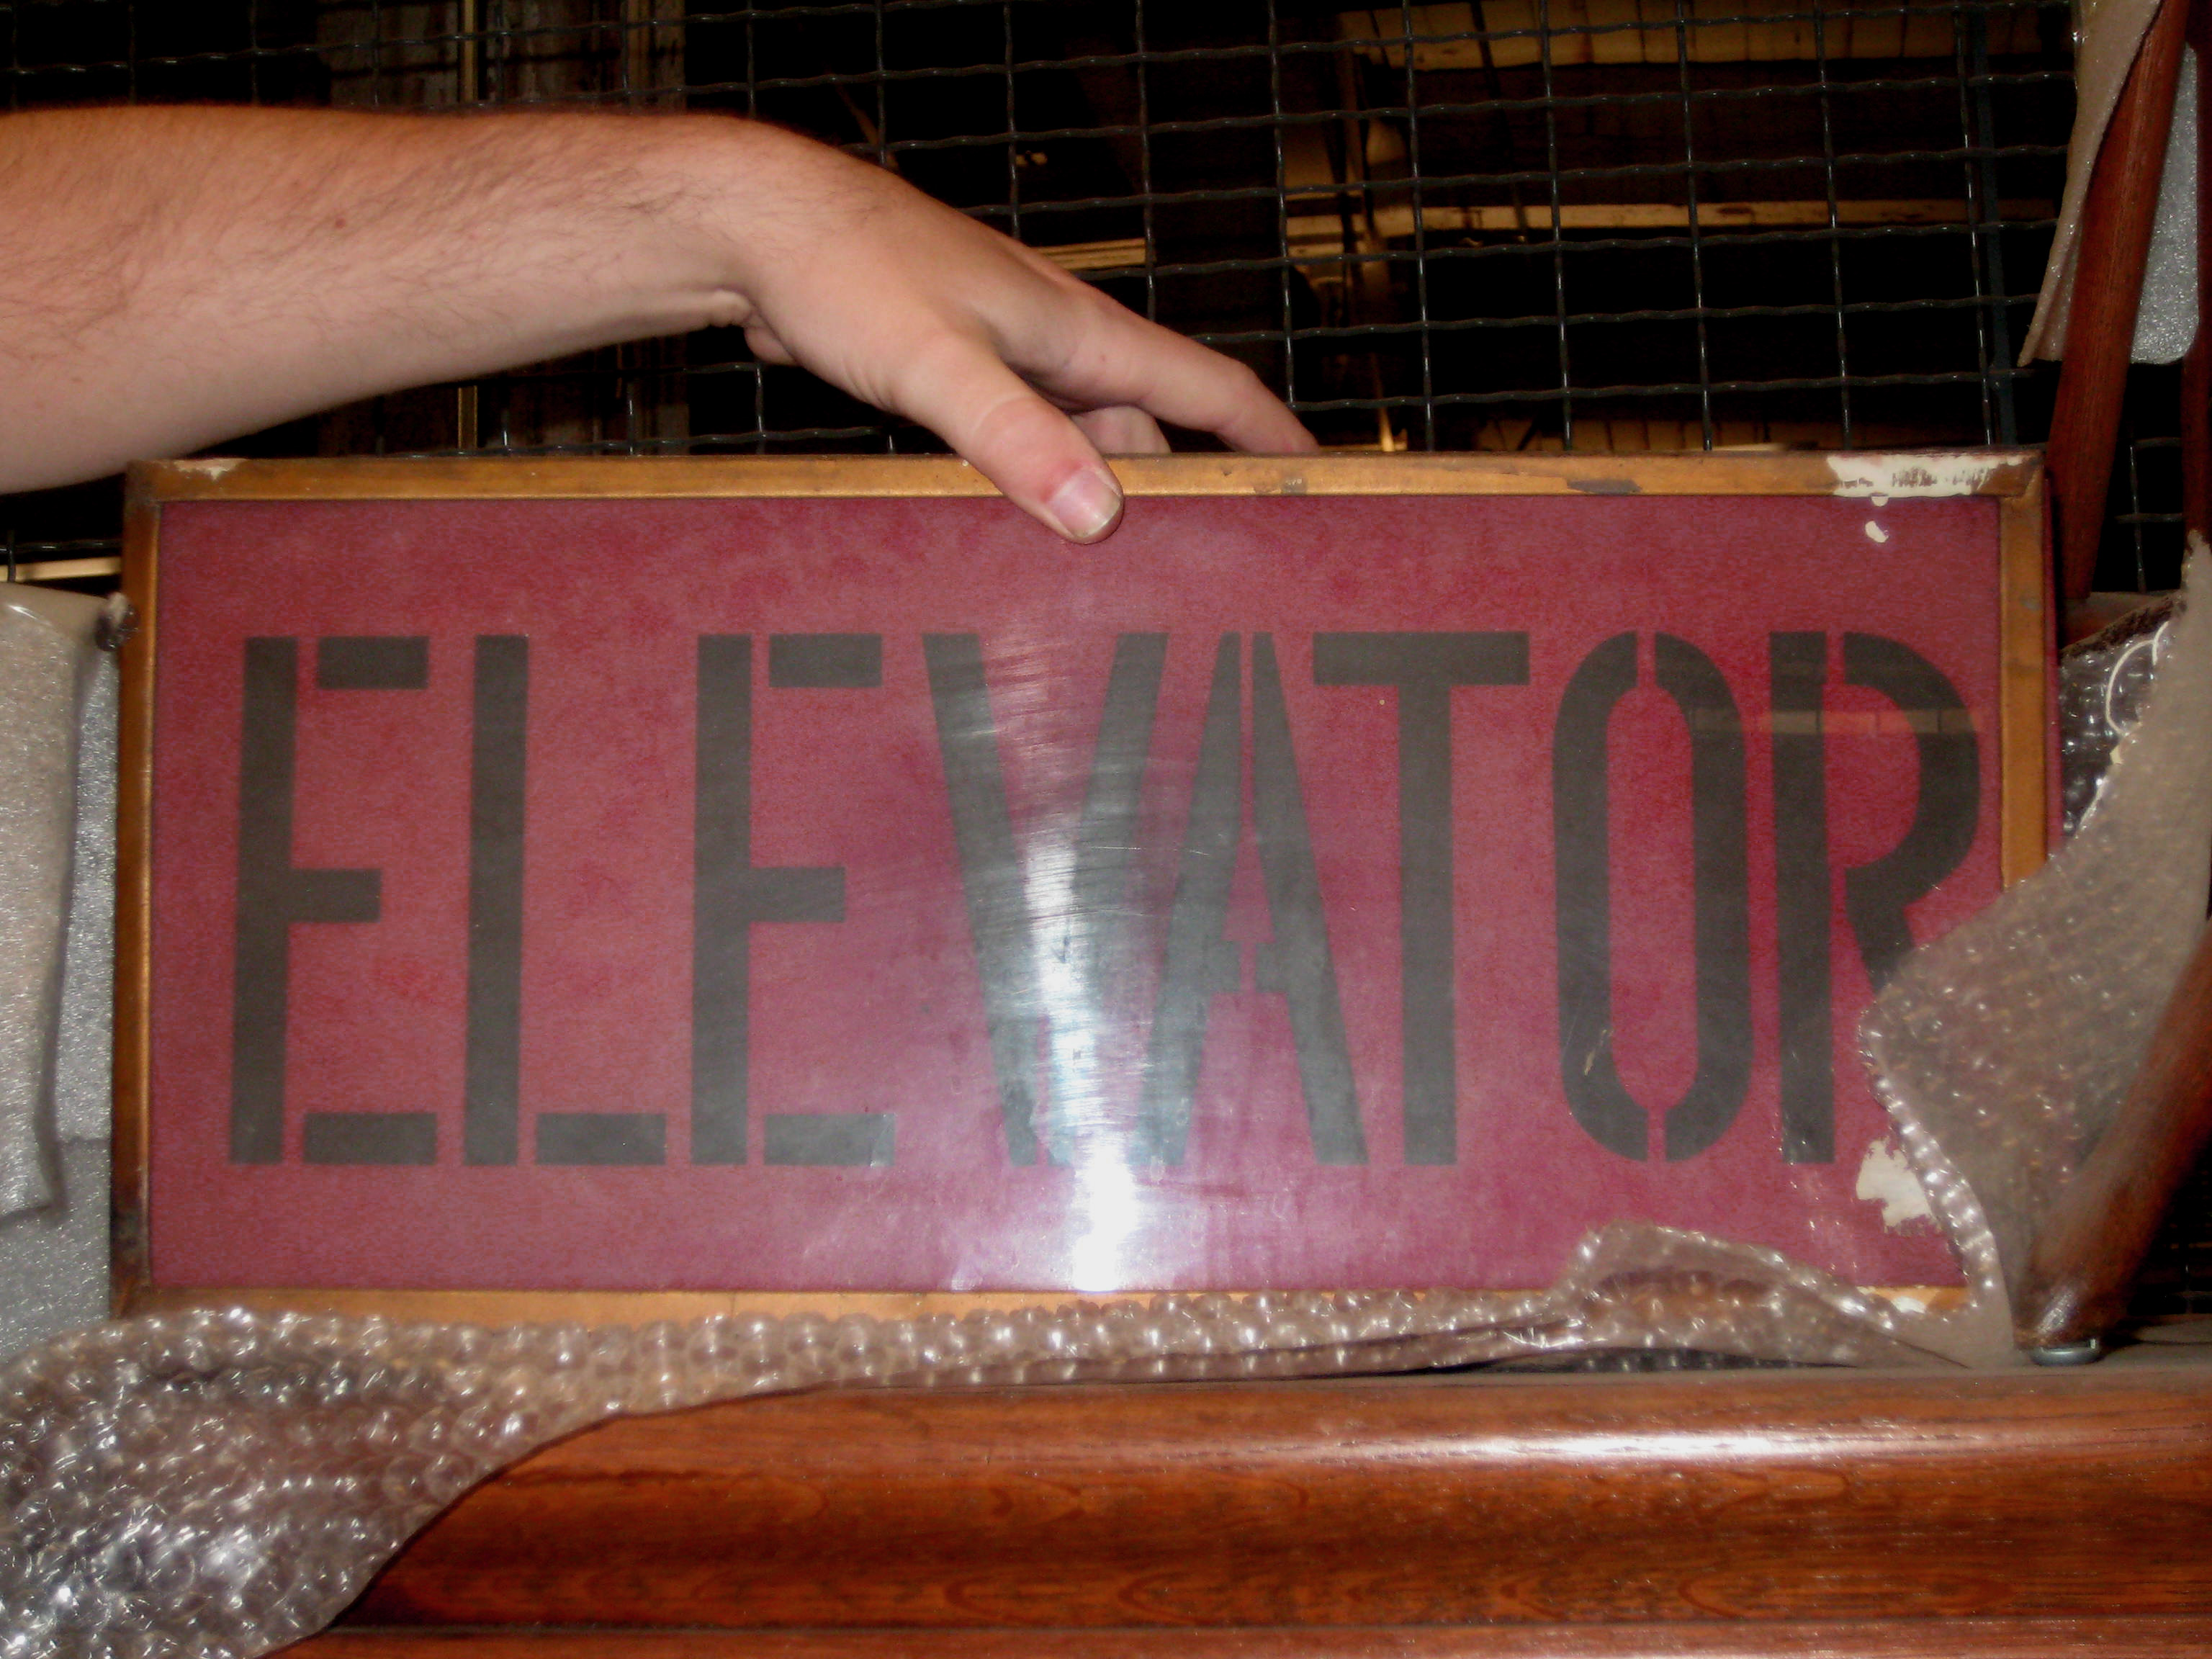 elevator sign